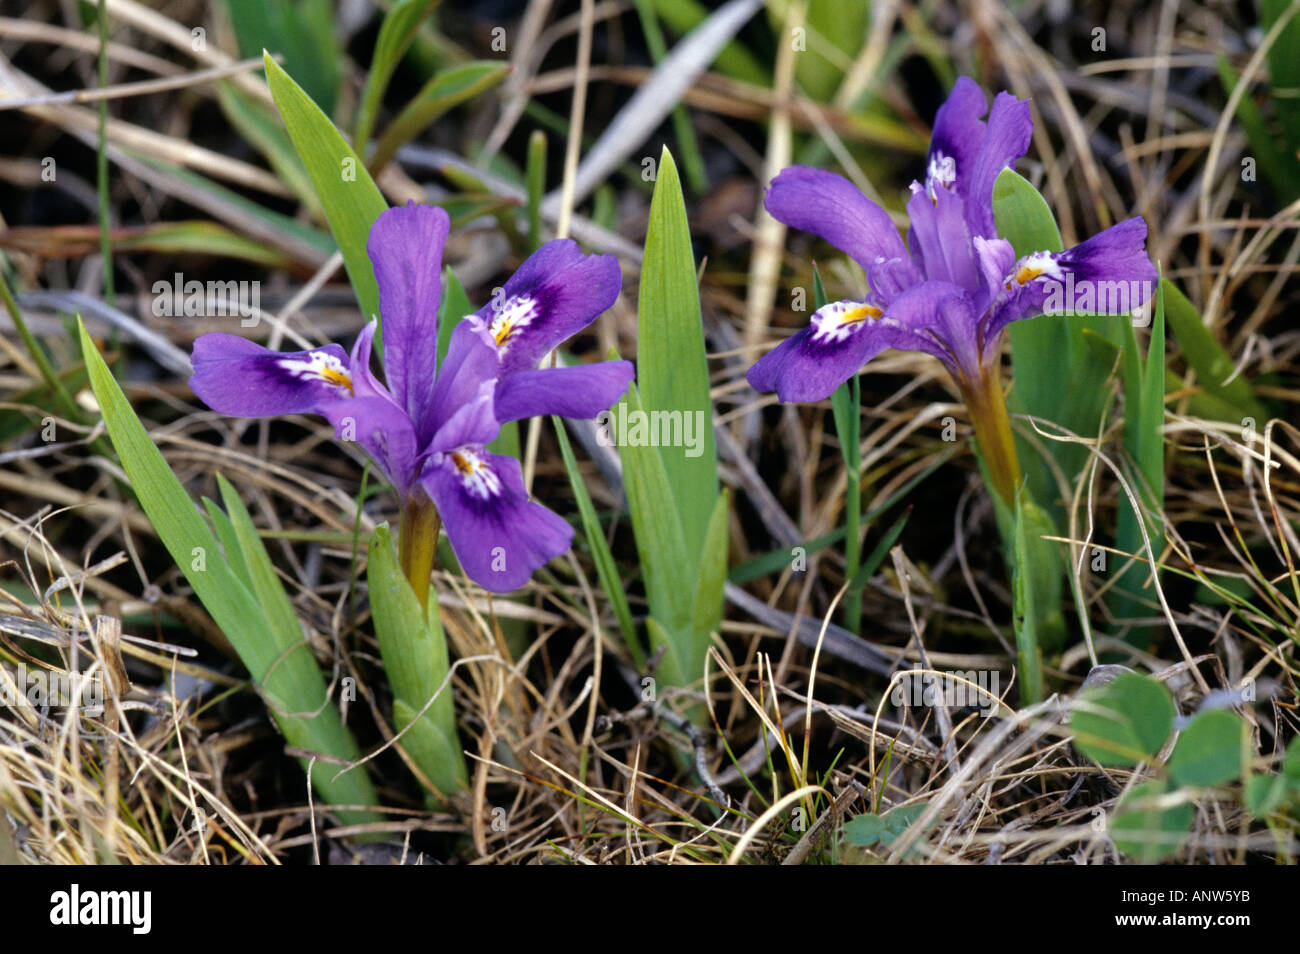 Blue Flag Iris, Most Popular Pond Plant